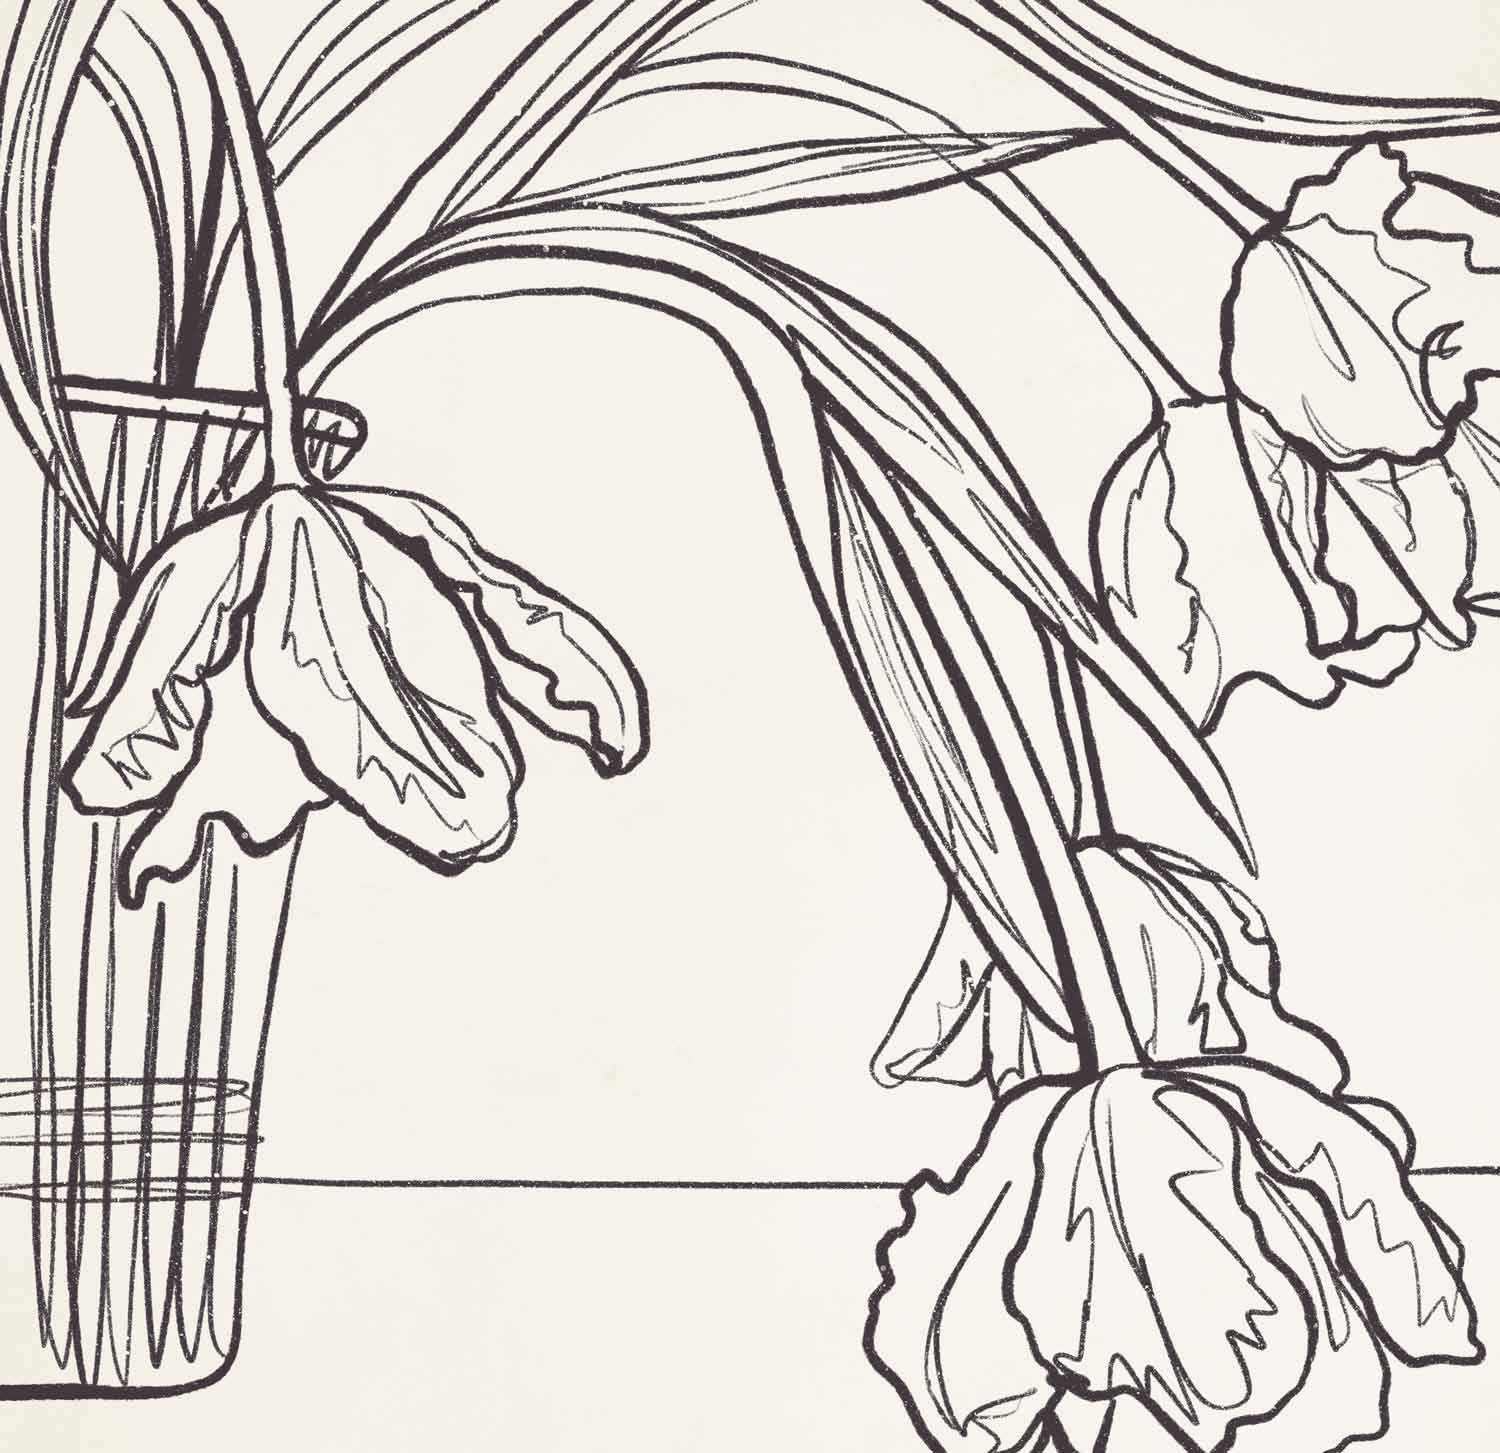 jominca-line-drawing-tulips-web.jpg